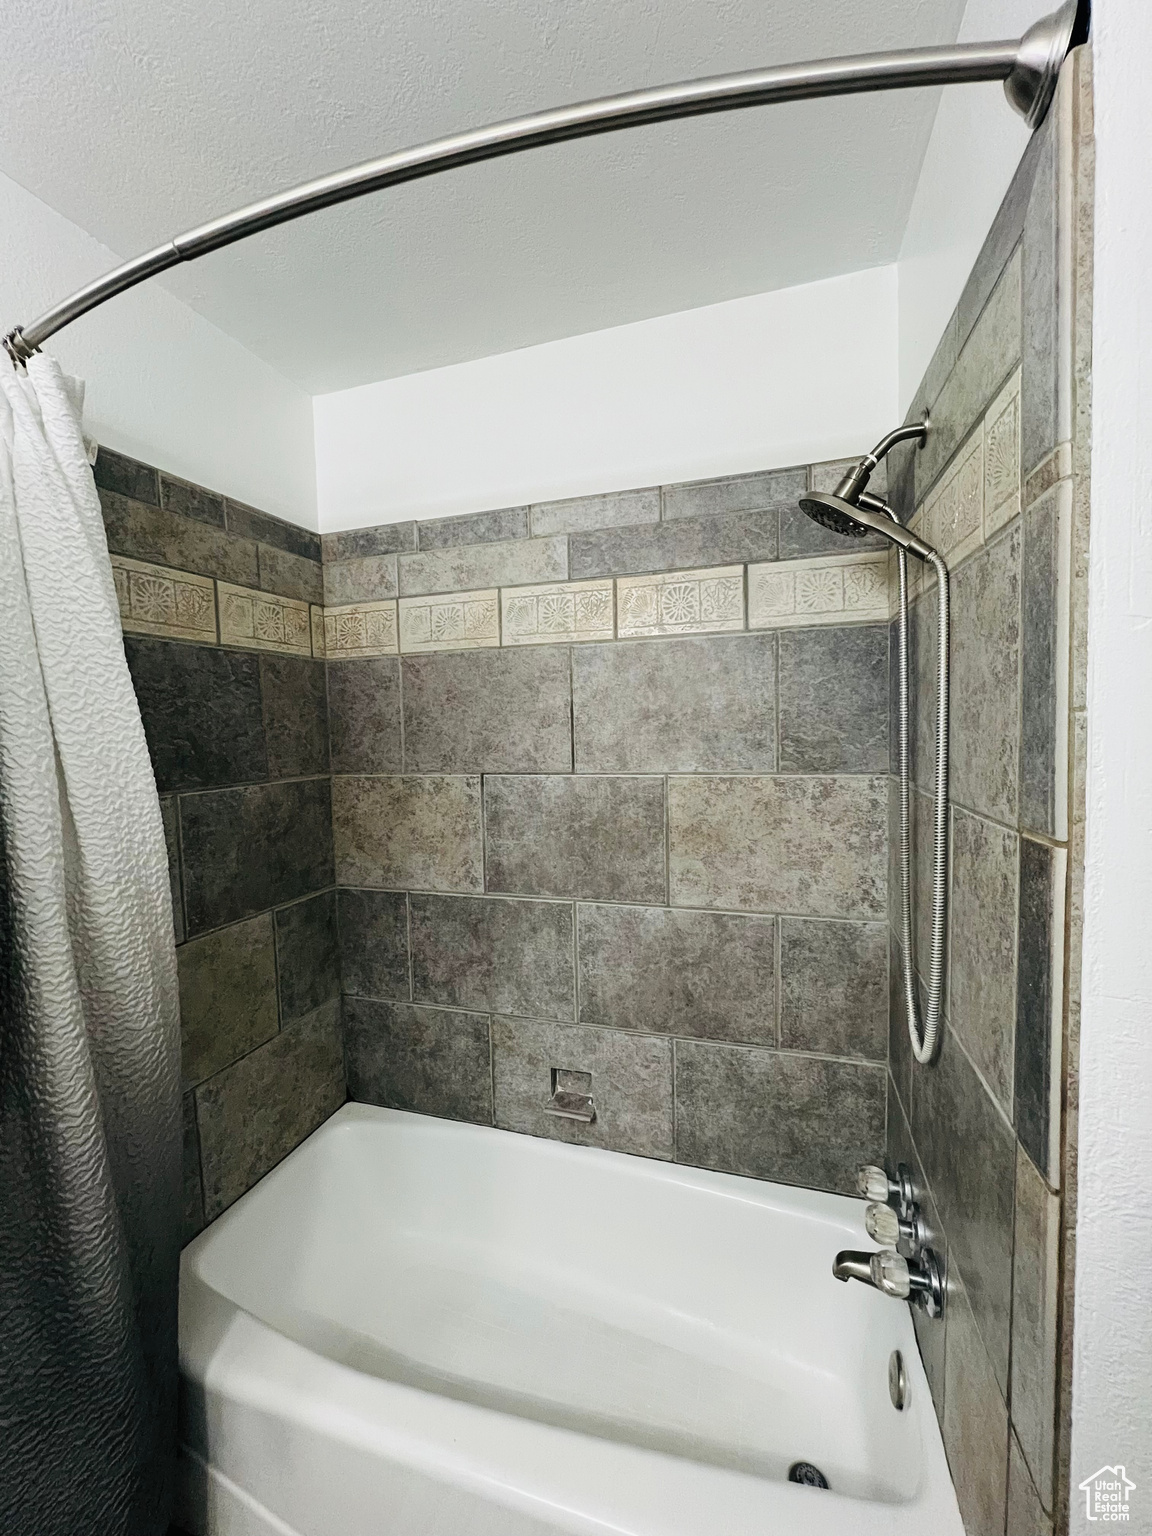 Main bathroom shower/tub